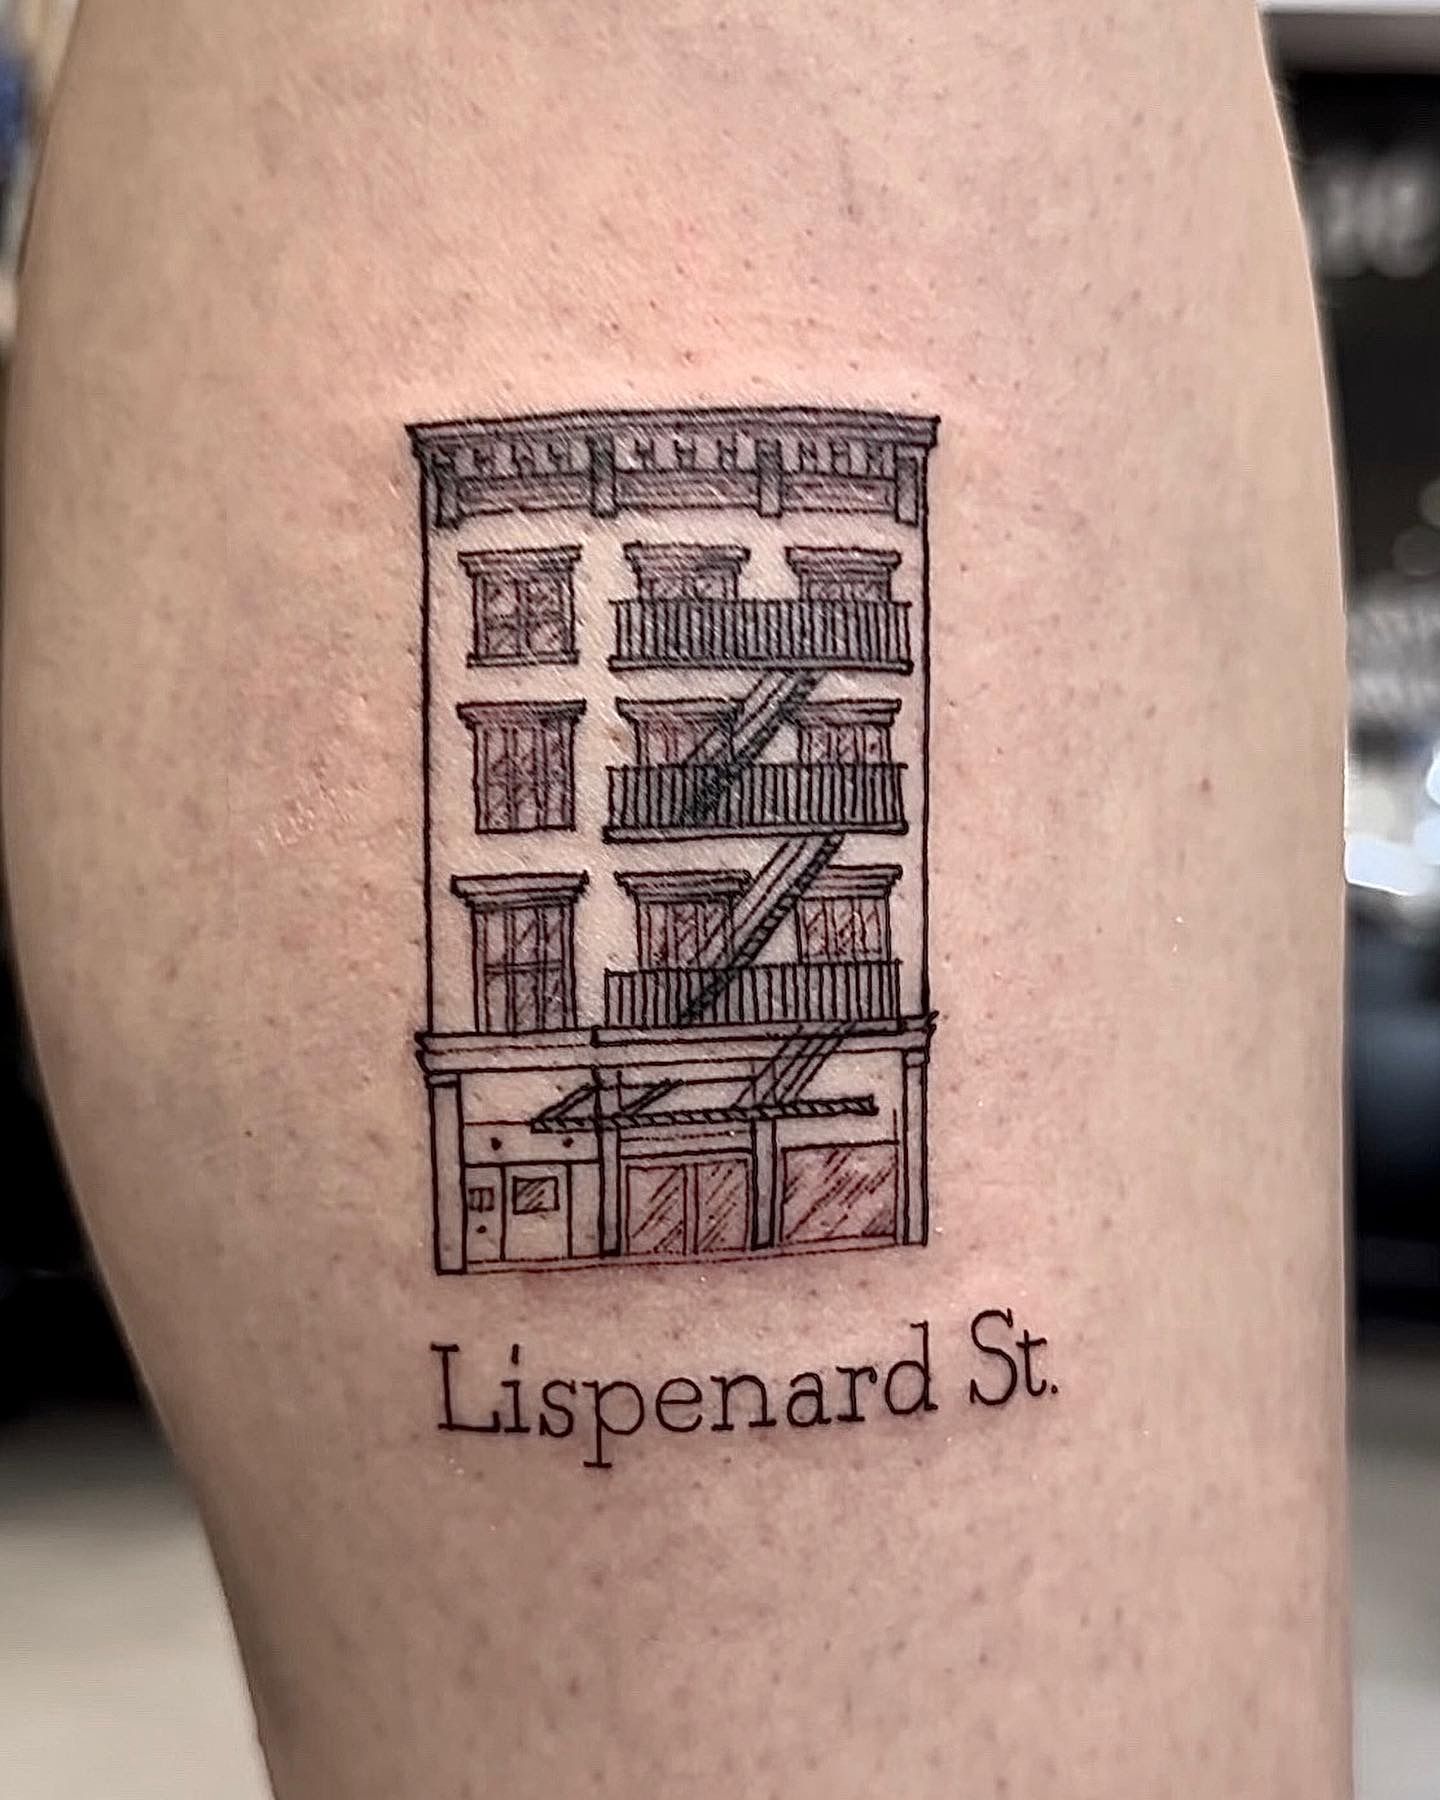 German Street Tattoo: Tattoo artist's journey leads him to downtown  Shepherdstown | News, Sports, Jobs - Shepherdstown Chronicle